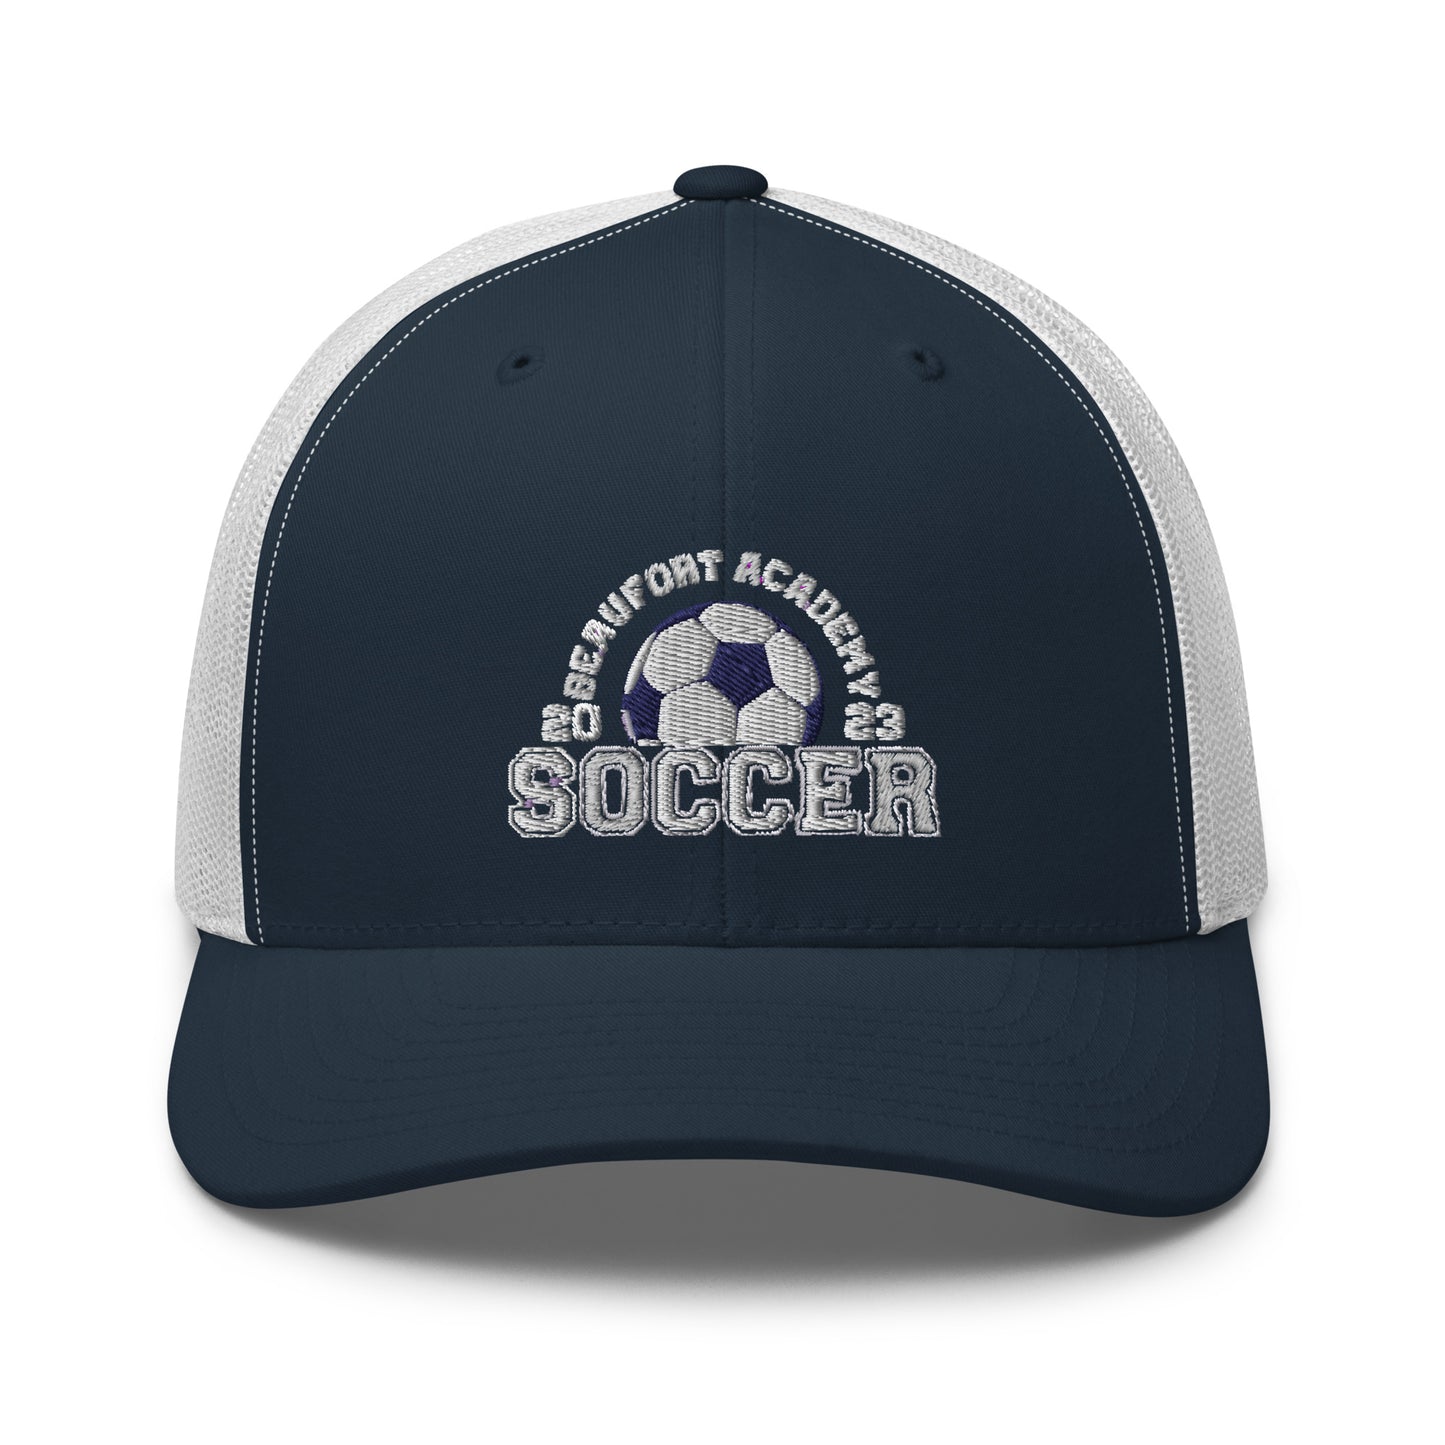 Soccer Trucker Cap